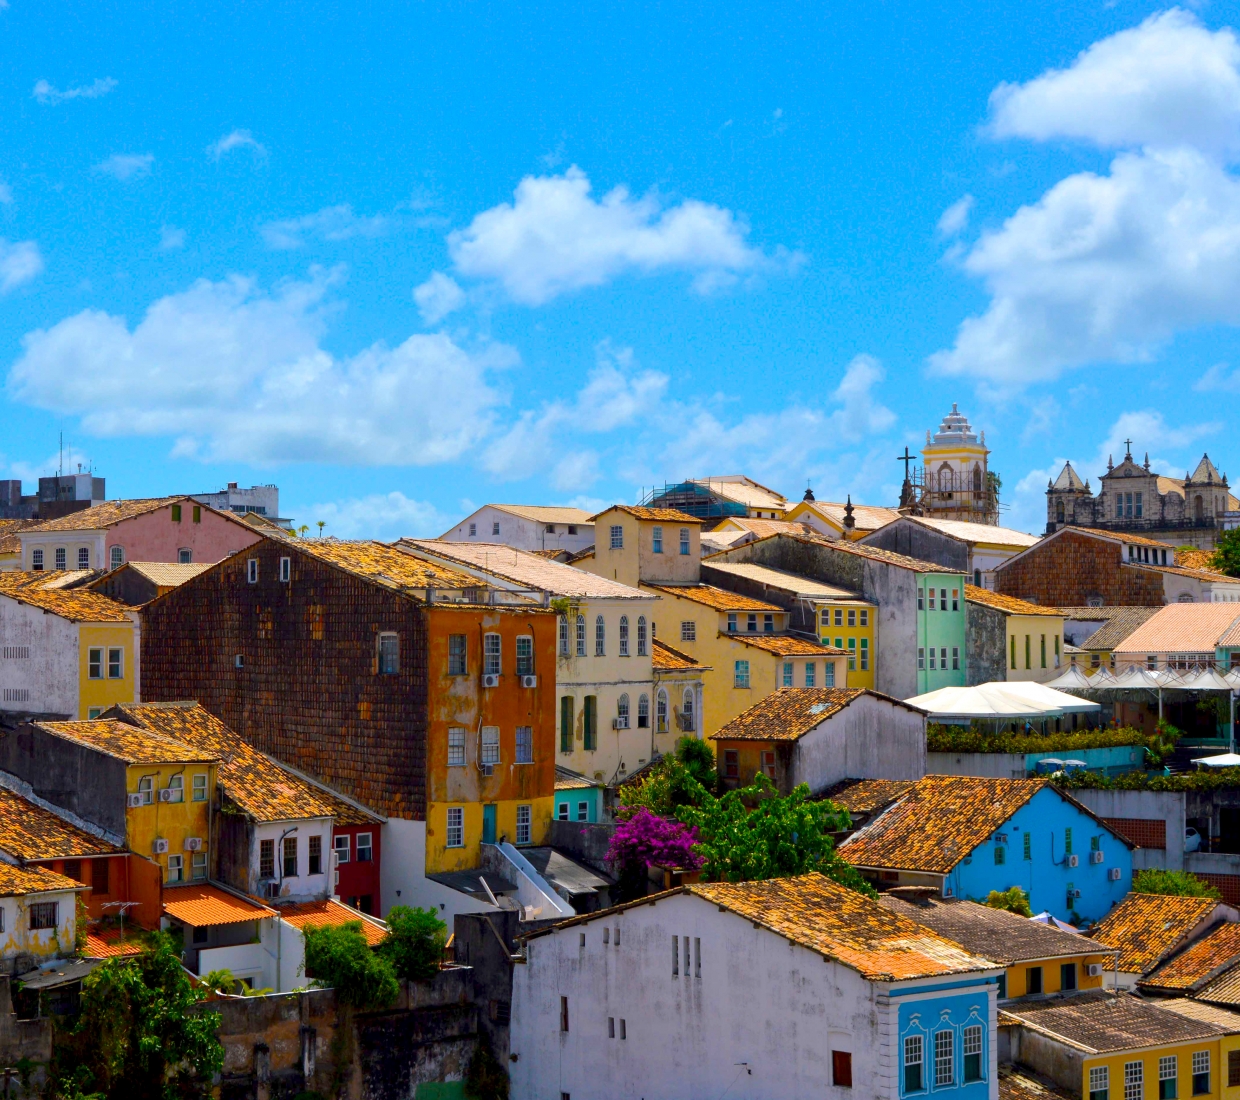 Hotéis boutique, hotéis de charme e turismo rural Bahia